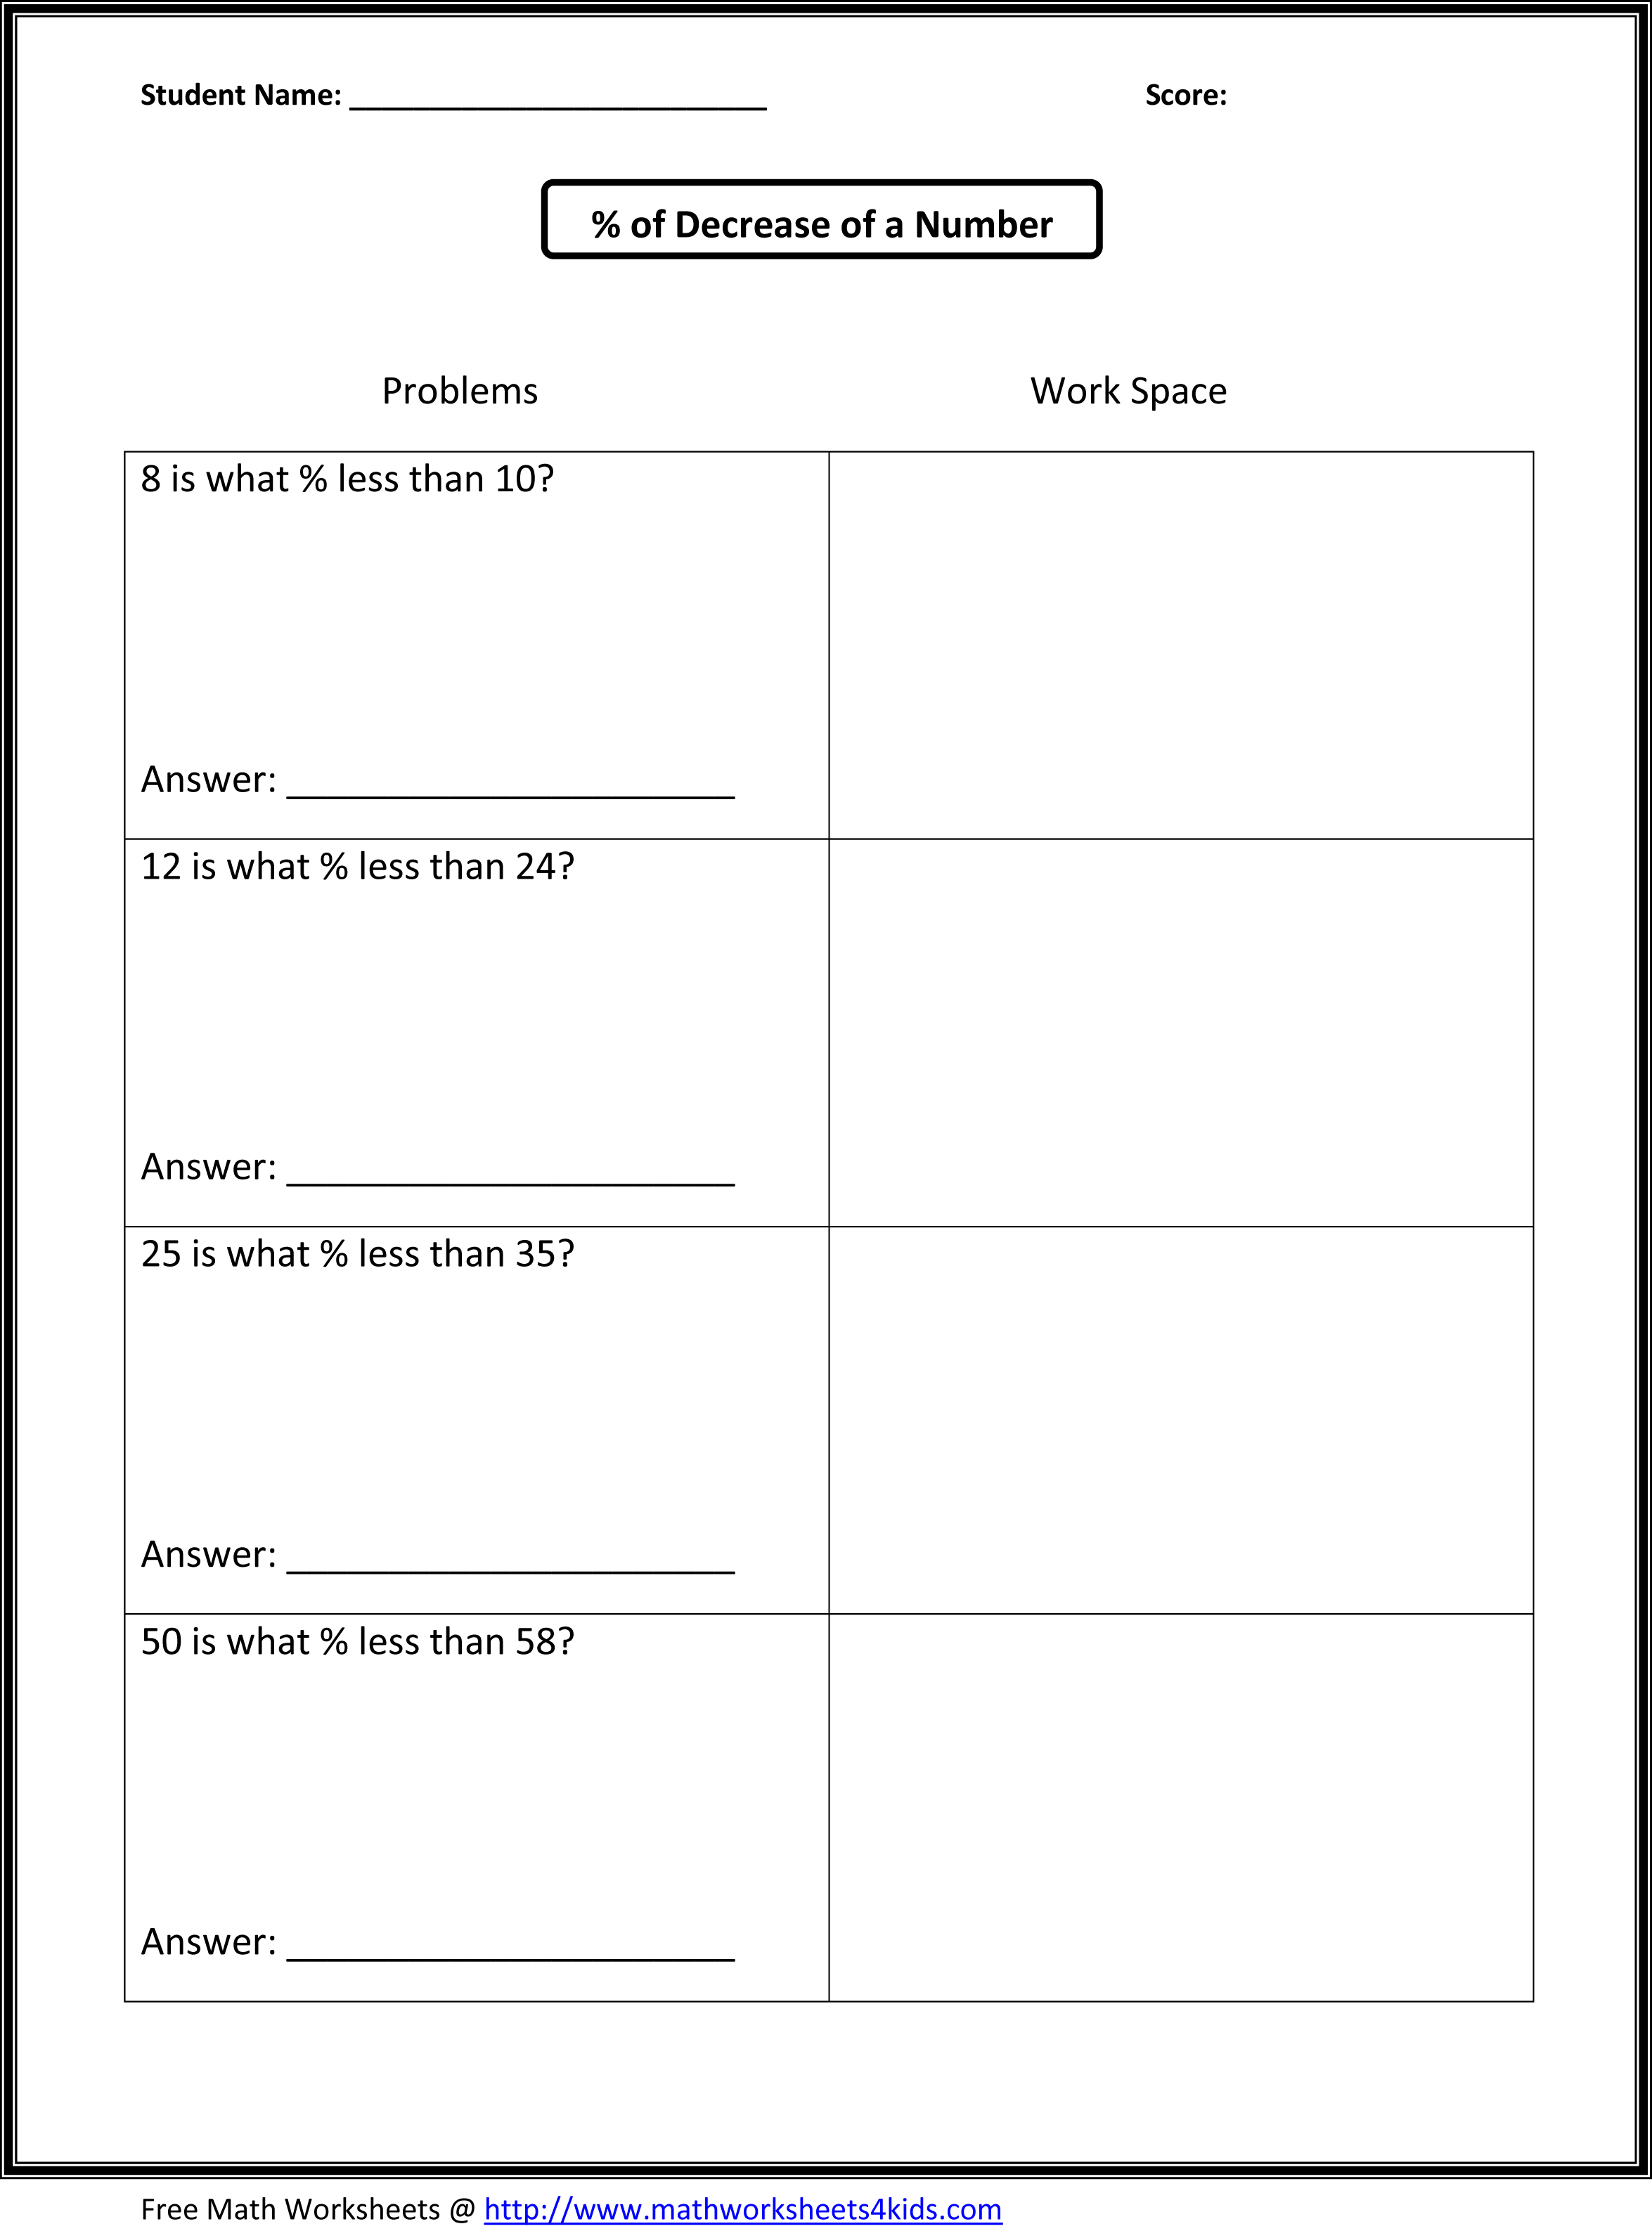 11 Best Images Of 7 Grade Worksheets 7th Grade Math Worksheets 7th Grade Science Worksheet